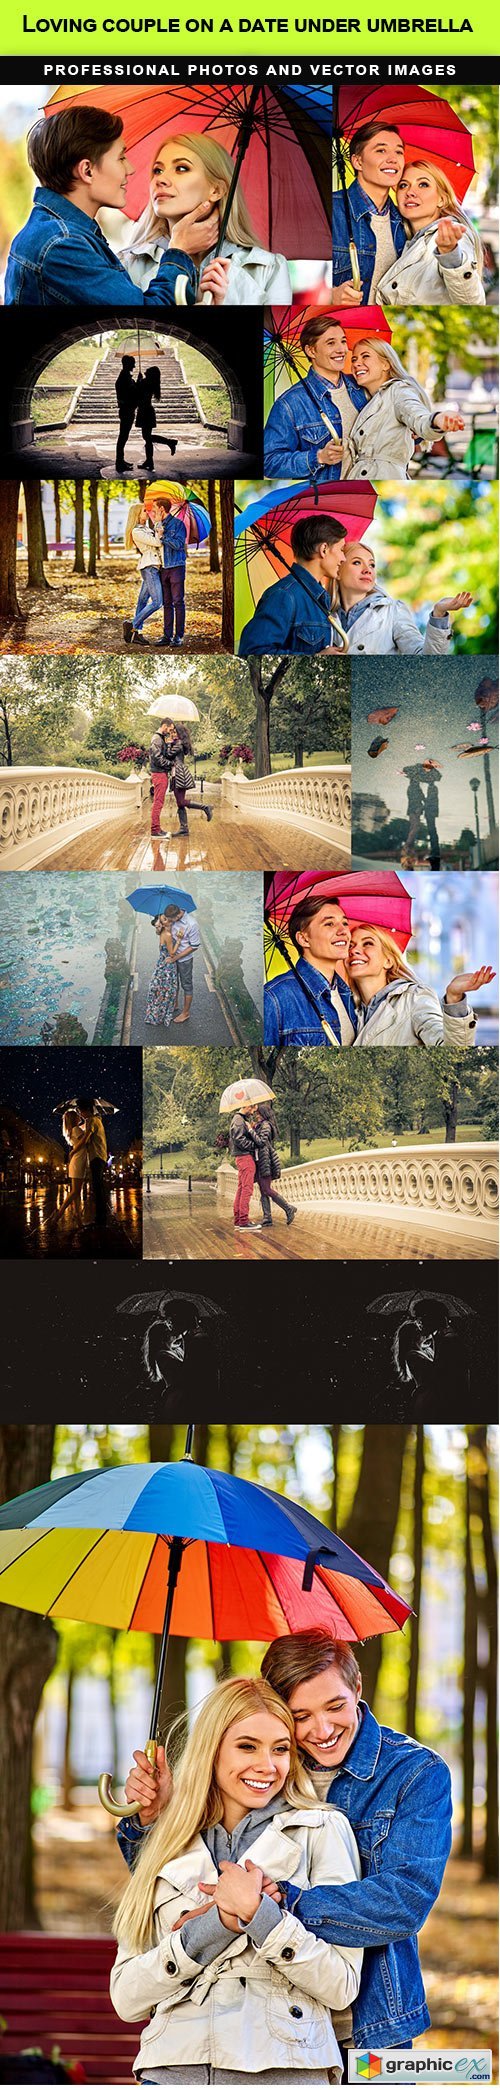 Loving couple on a date under umbrella